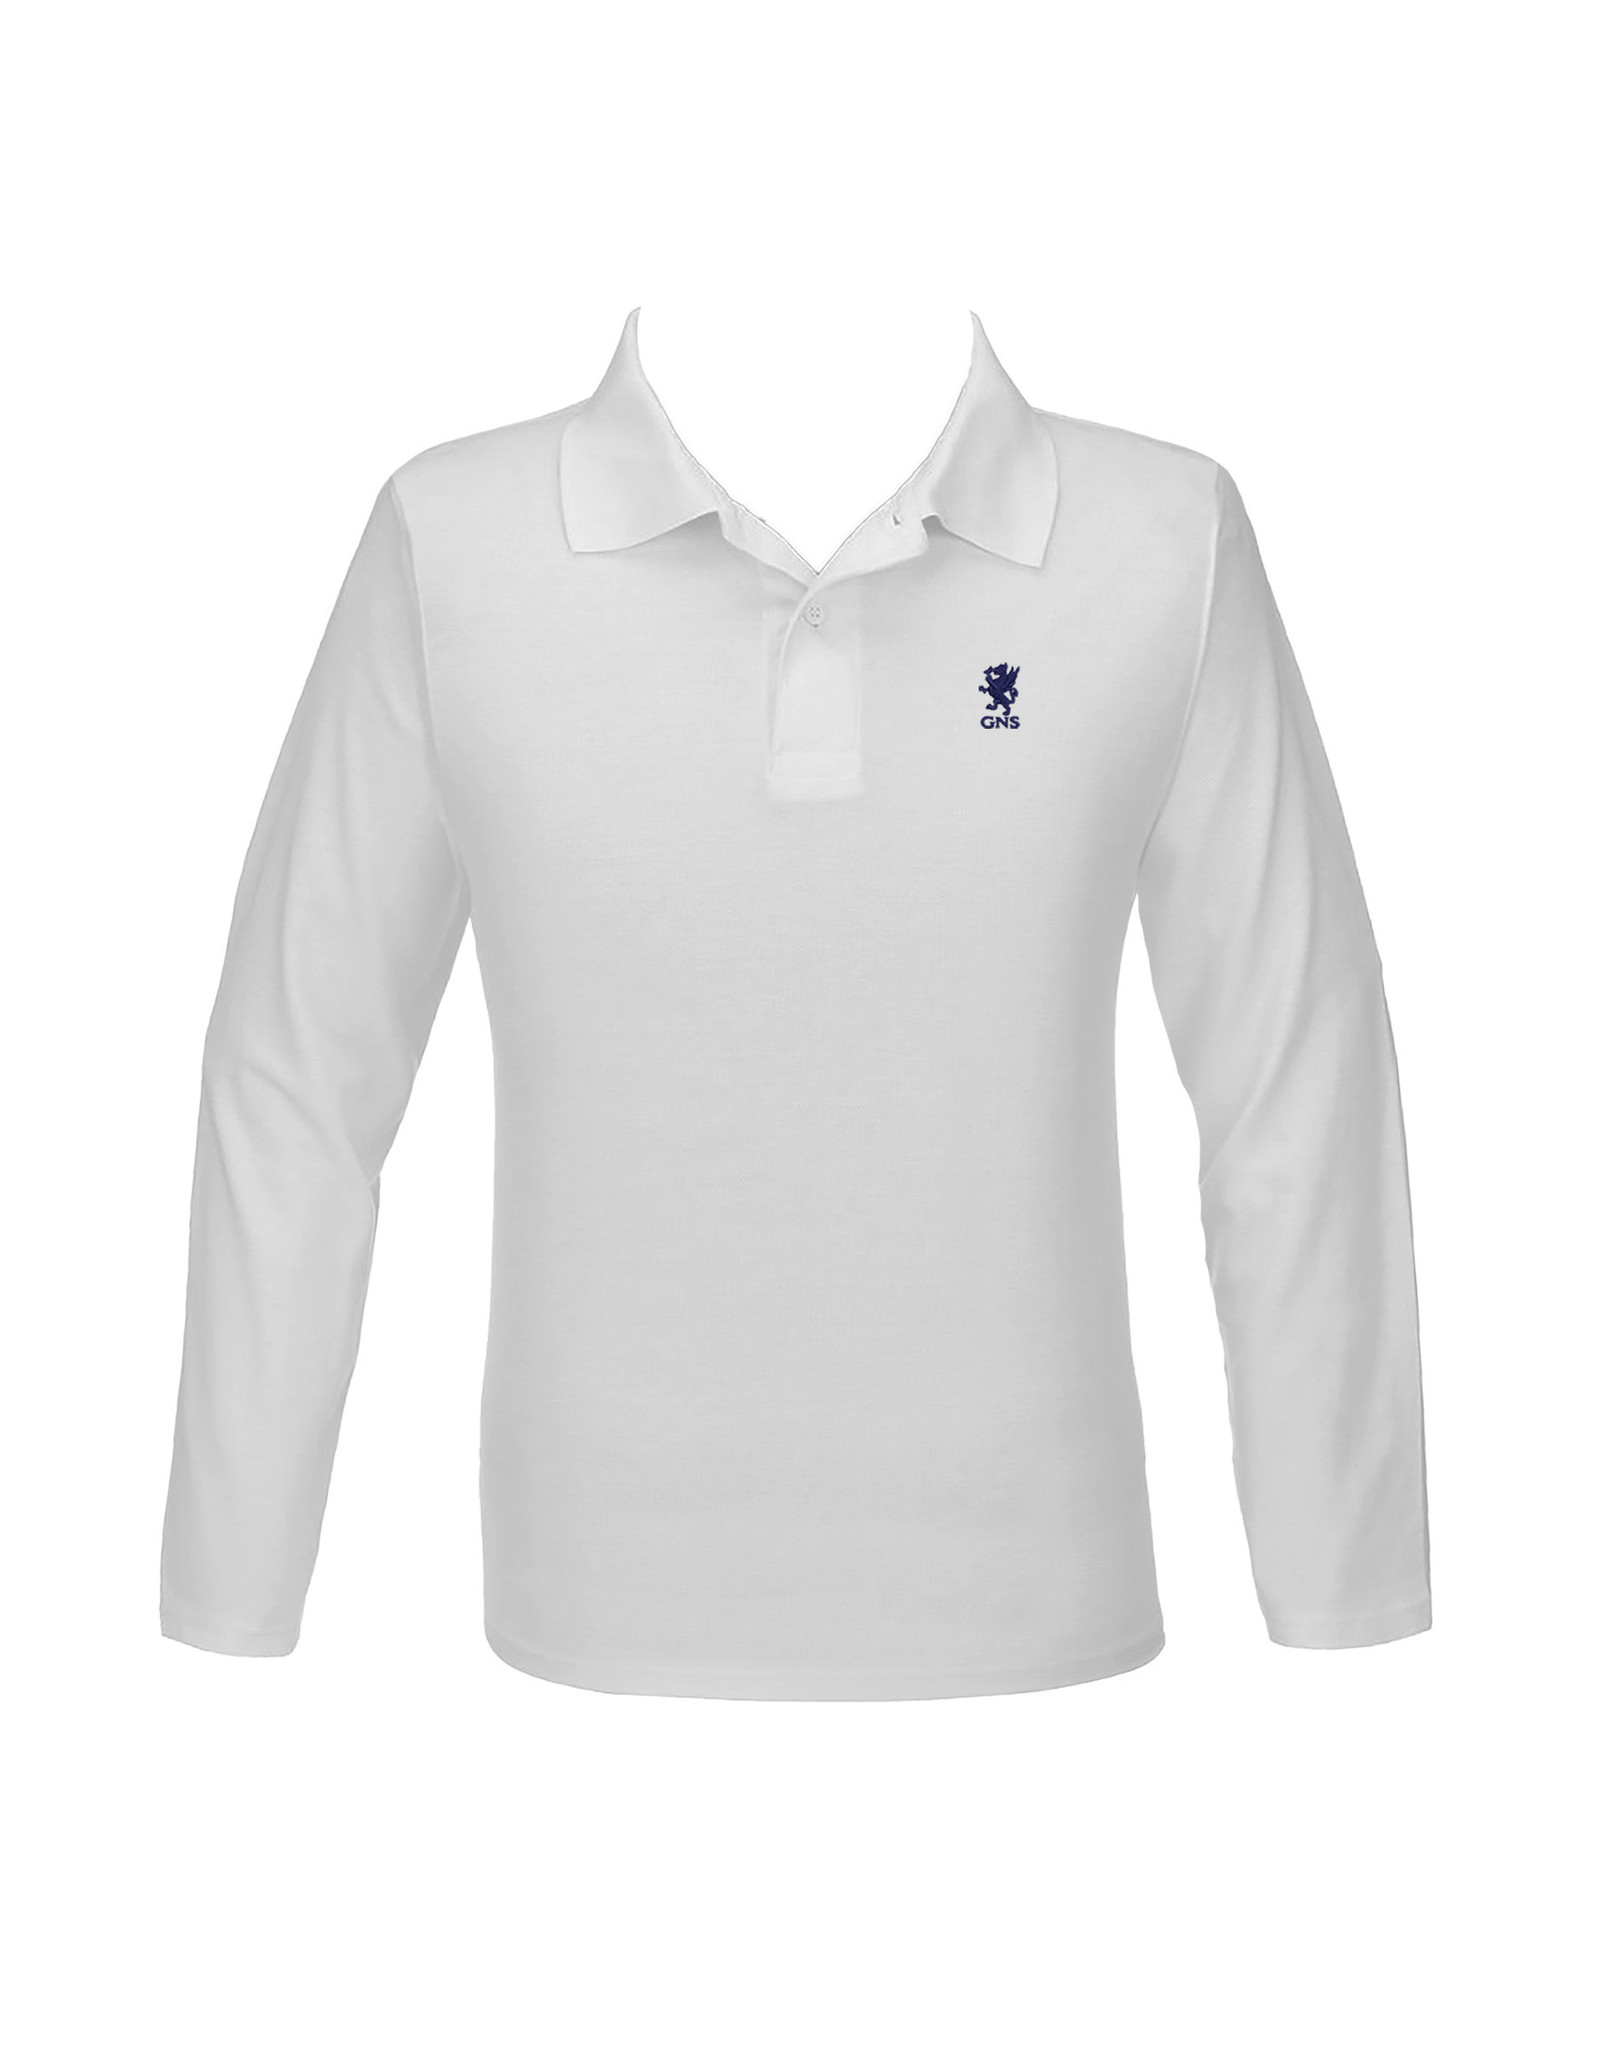 Cambridge Golf Shirt, Long Sleeve - Mens